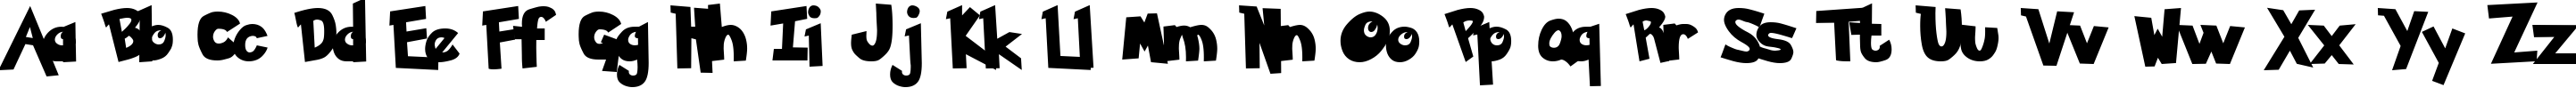 Пример написания английского алфавита шрифтом Pokemon  Solid